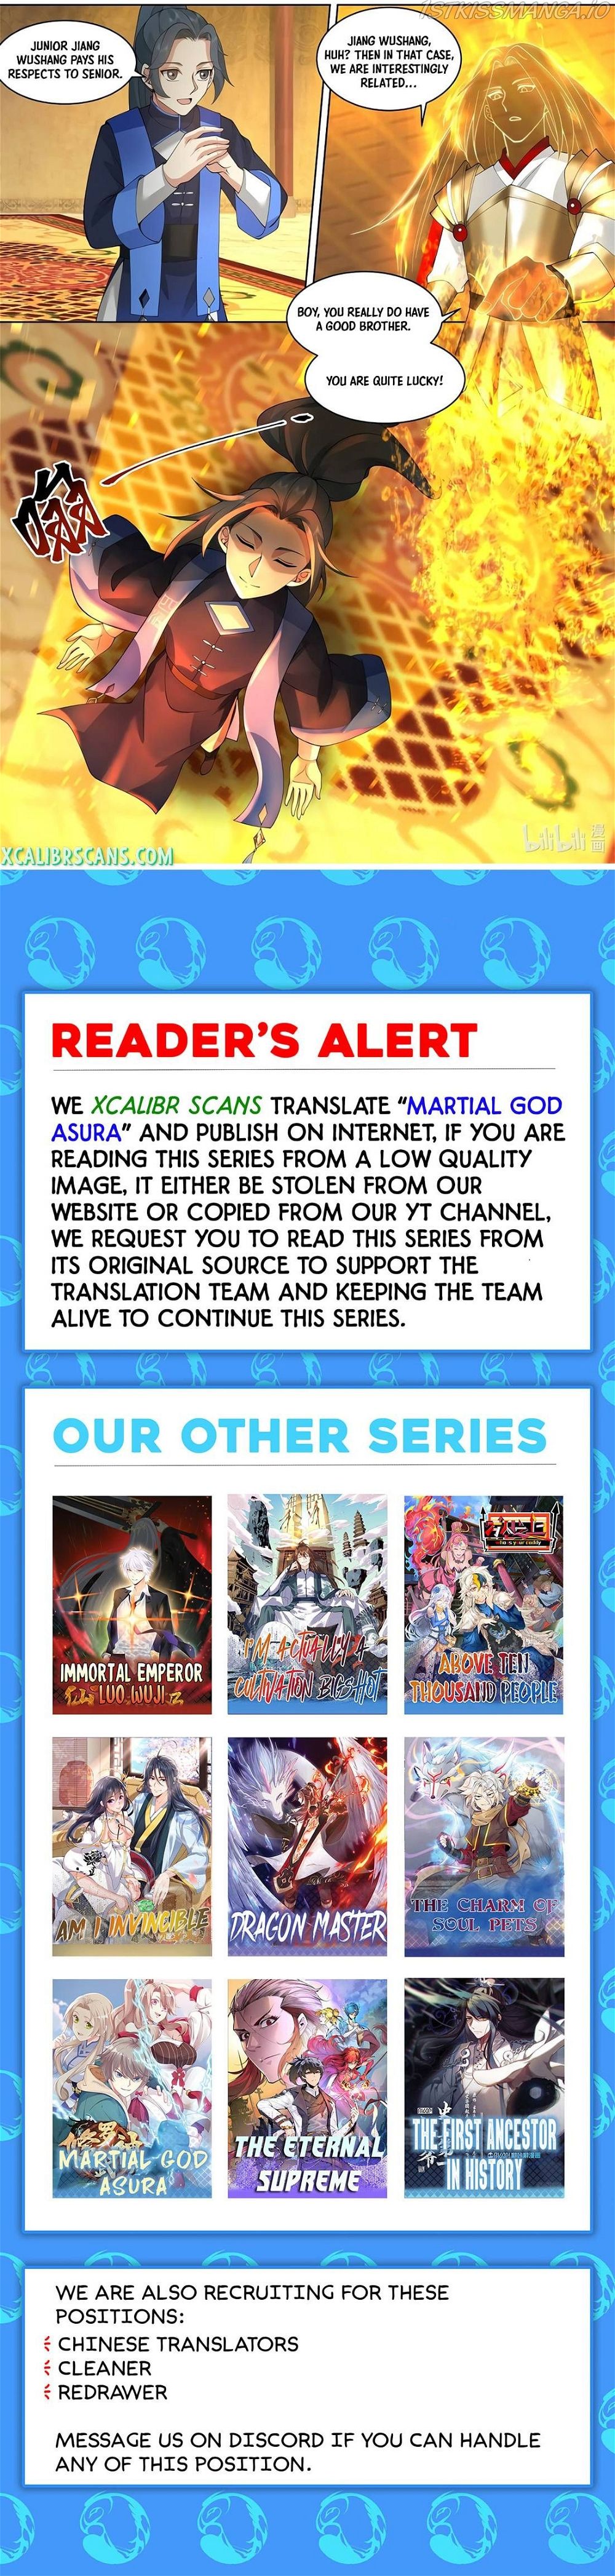 Martial God Asura Chapter 506 - Page 10